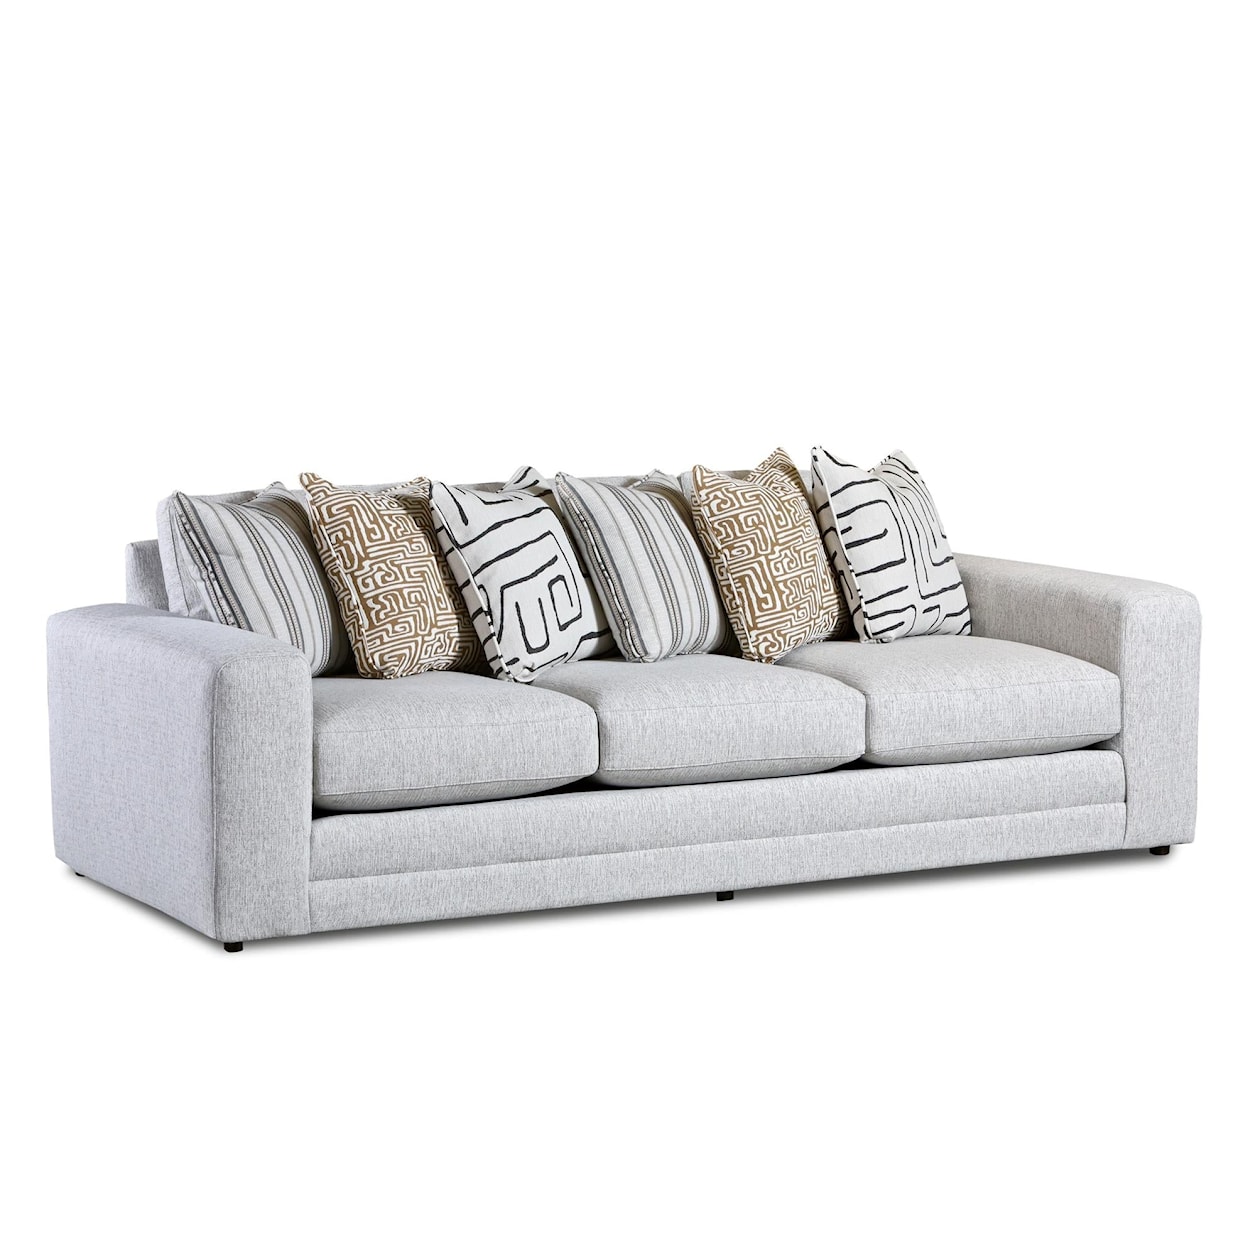 Fusion Furniture 7000 DURANGO PEWTER Sofa